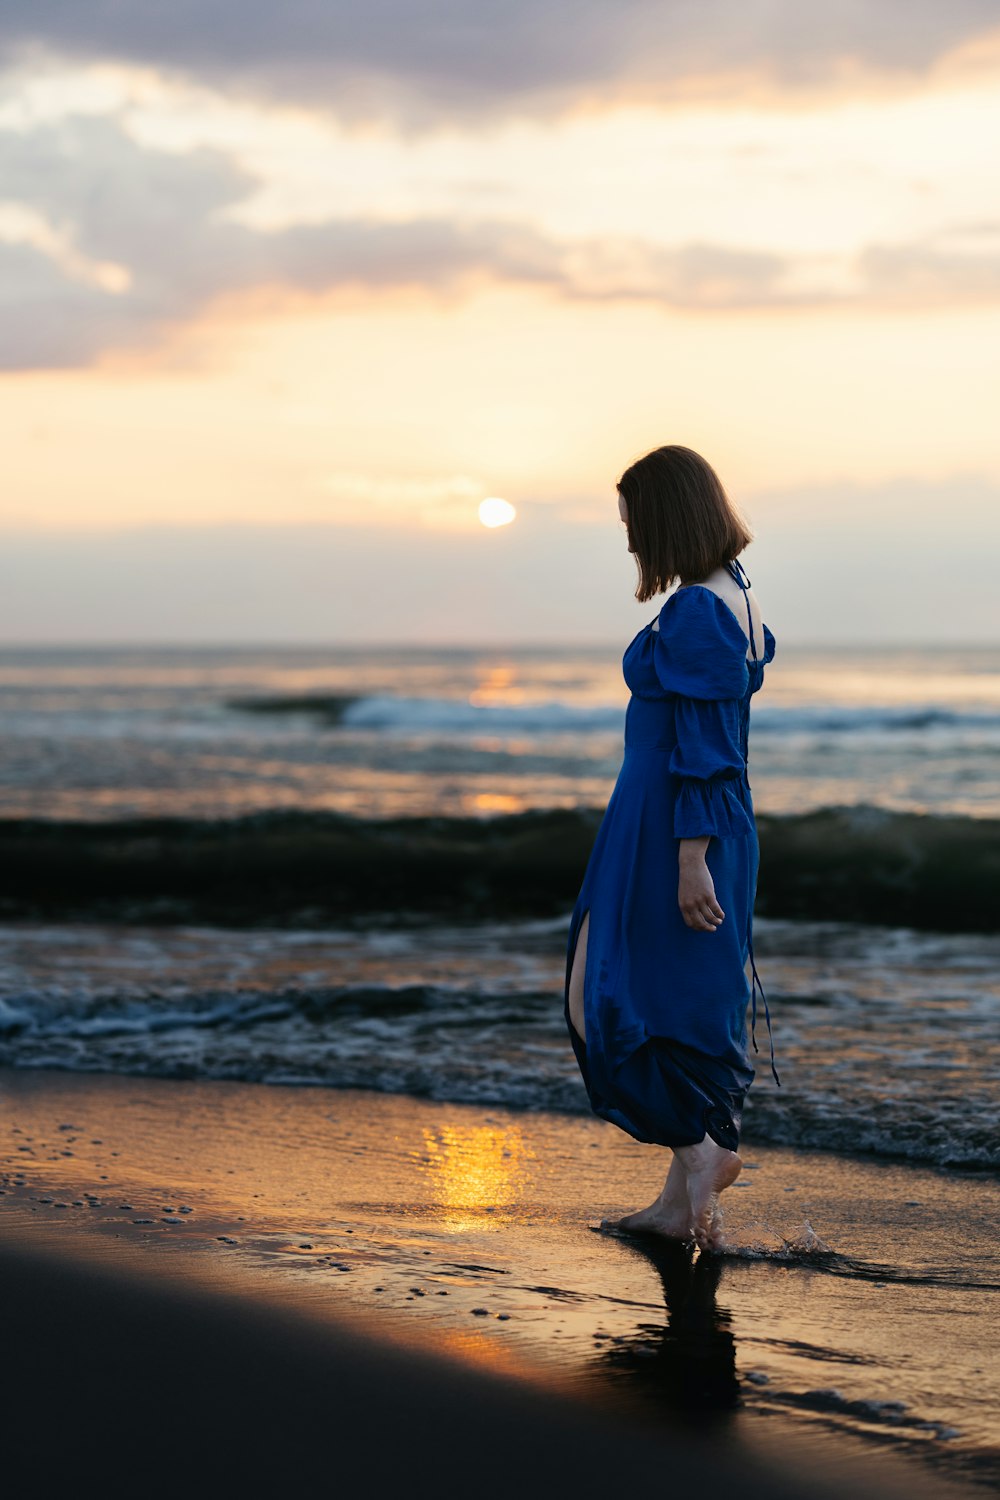 a woman in a blue dress is walking on the beach